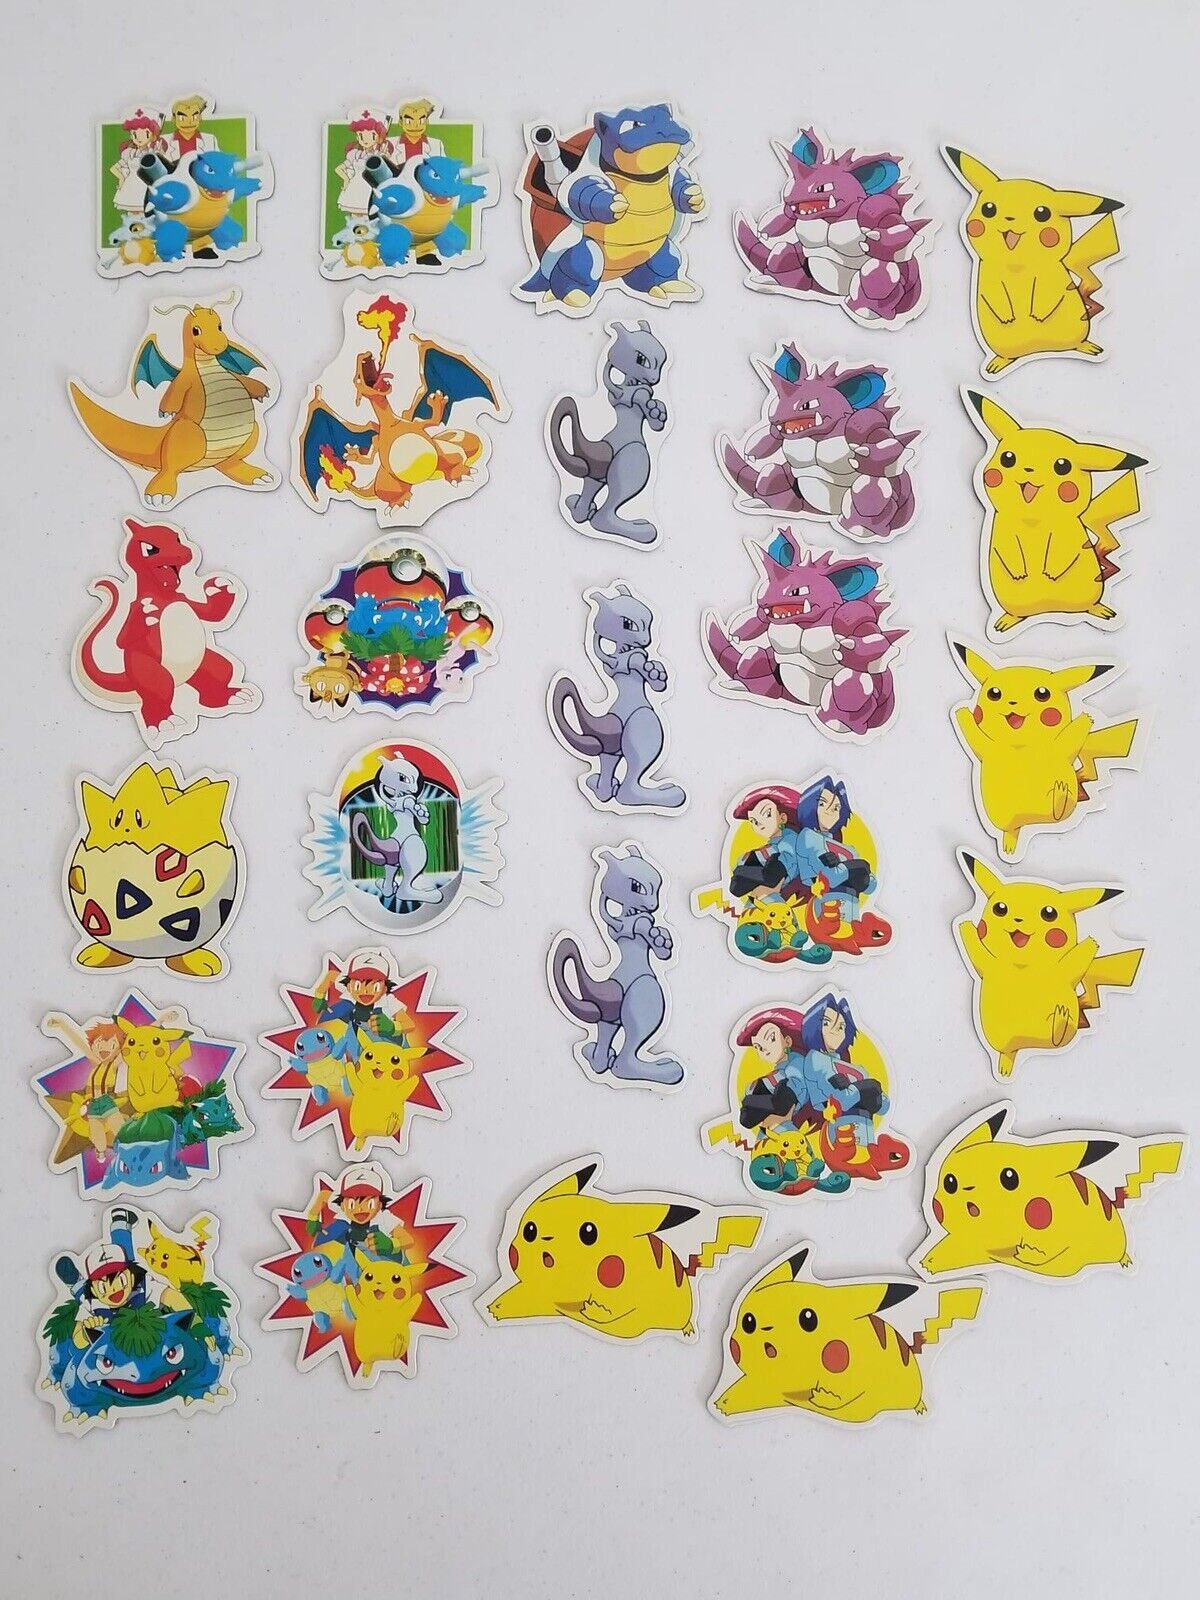 Vintage 1990s Pokemon Magnets 1st Gen, 30pc Lot, Pikachu, Charizard, 3-4” Size